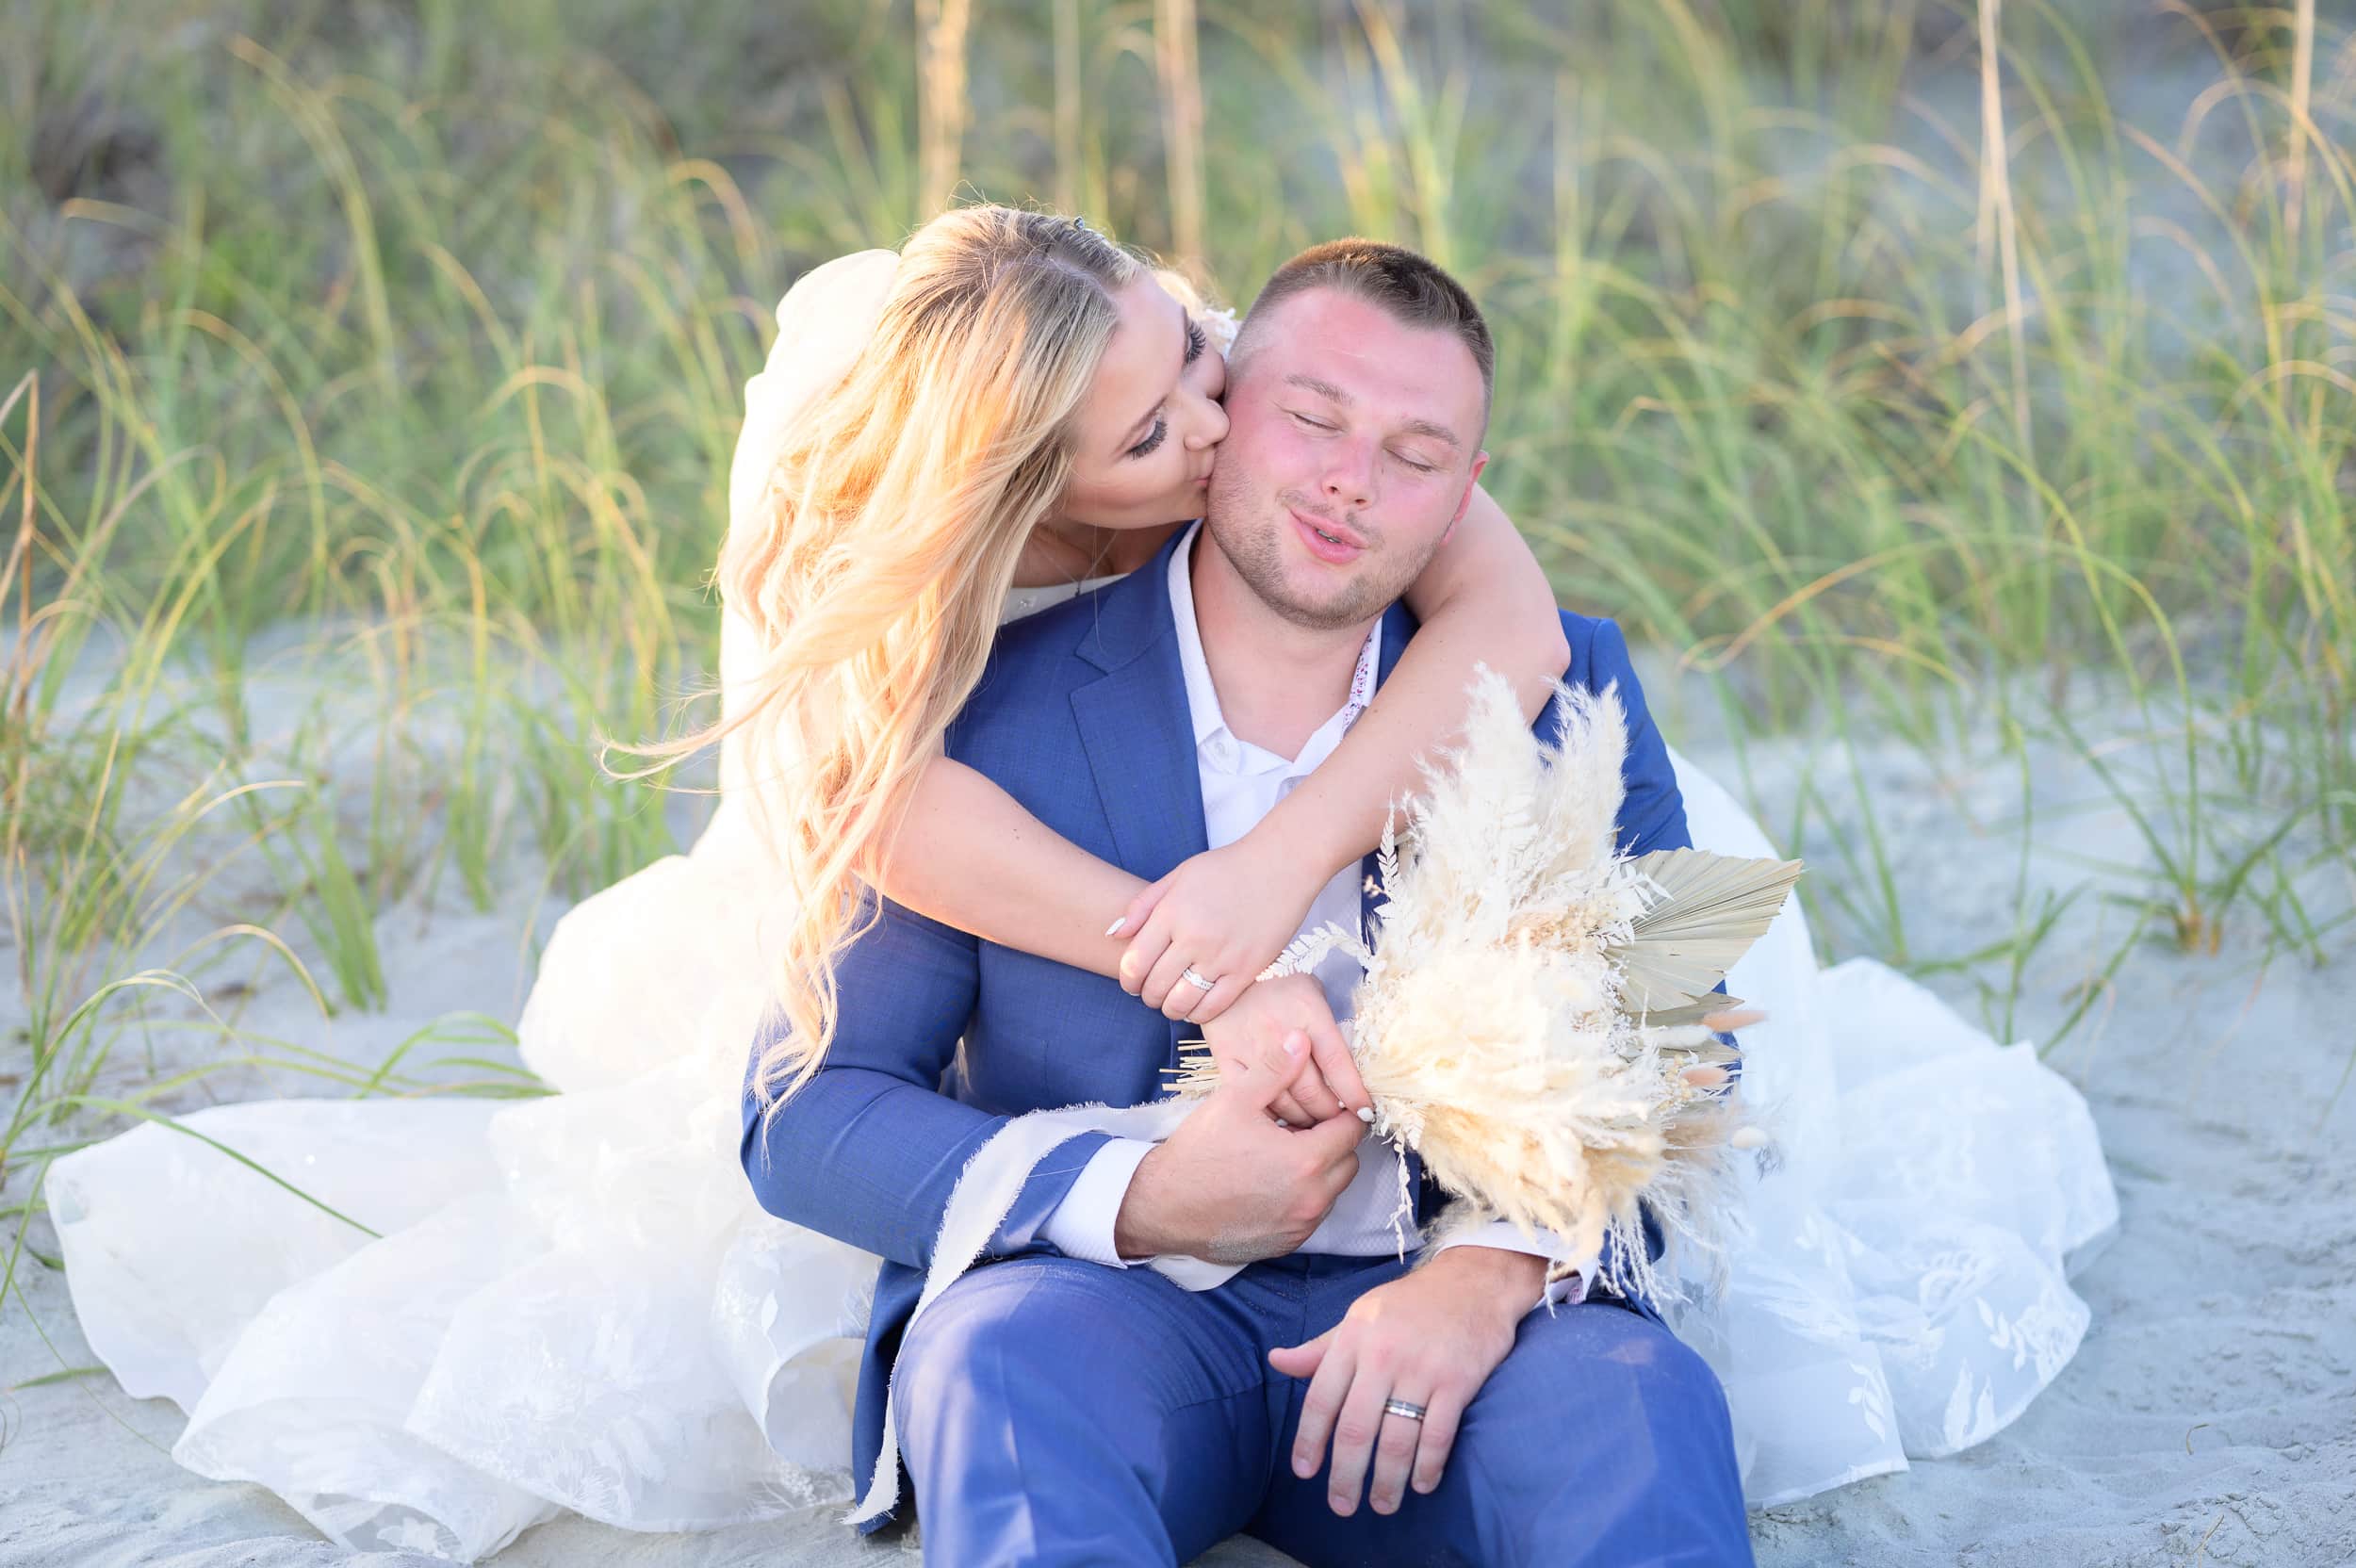 Bride hugging groom from behind and kissing on the cheek - North Beach Resort & Villas